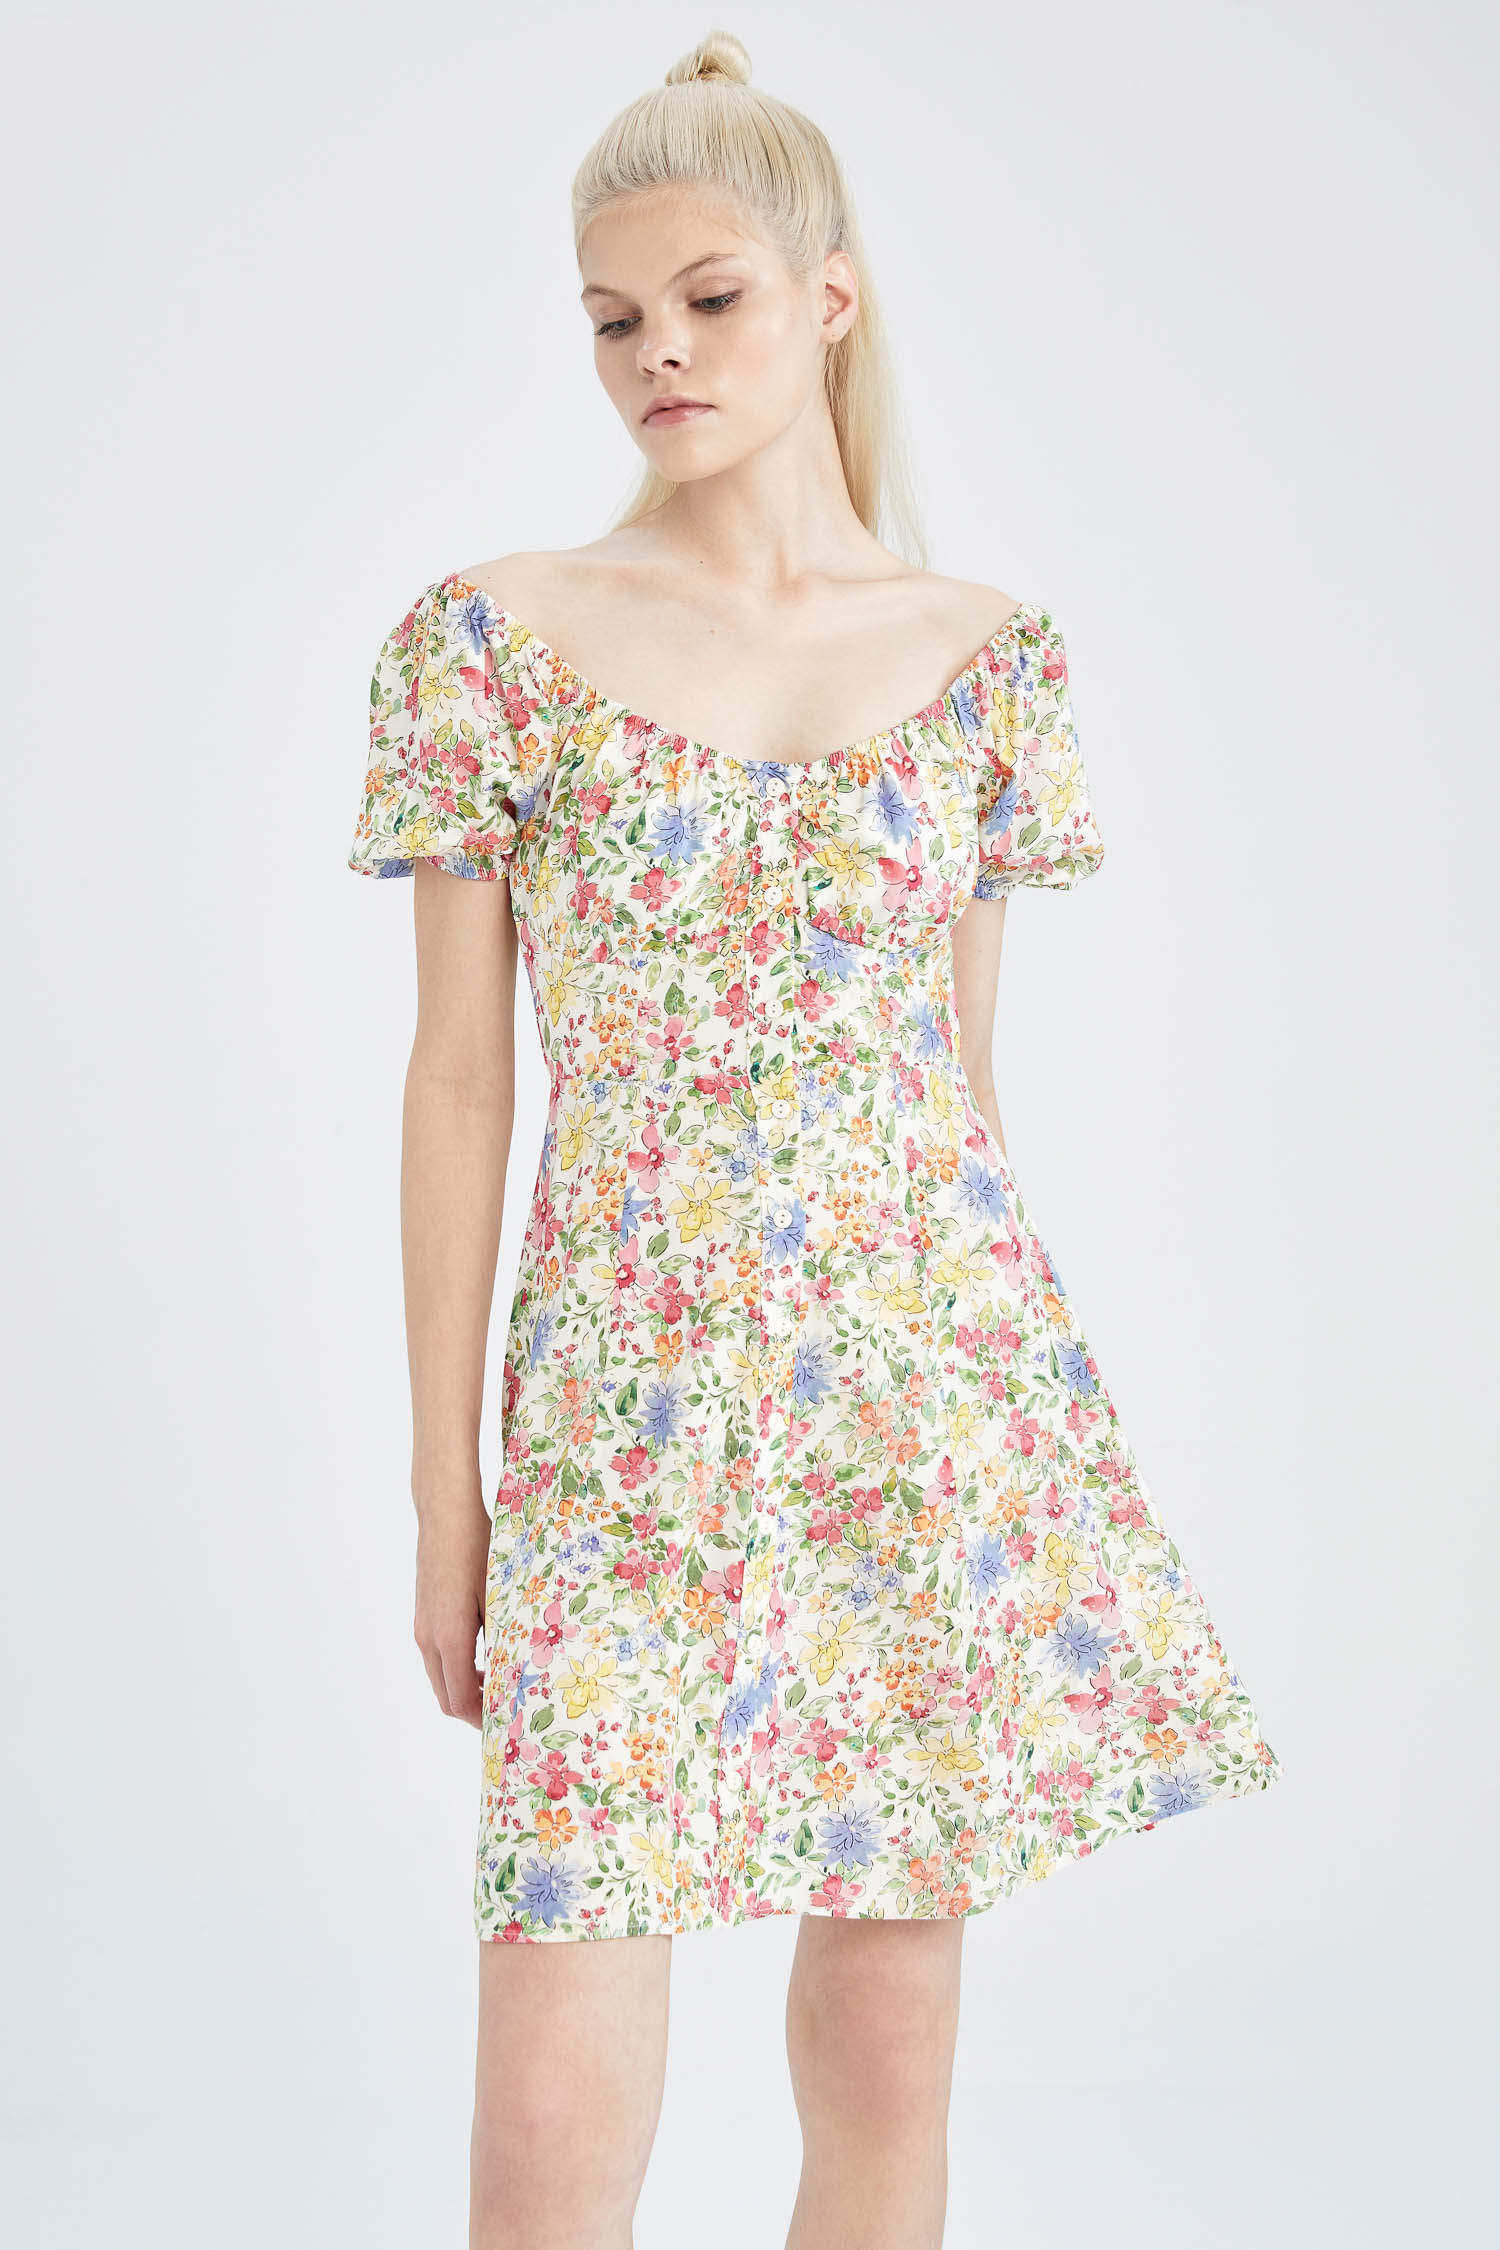 Ecru WOMAN U Neck Short Sleeve Floral Print Mini Dress 2460862 | DeFacto